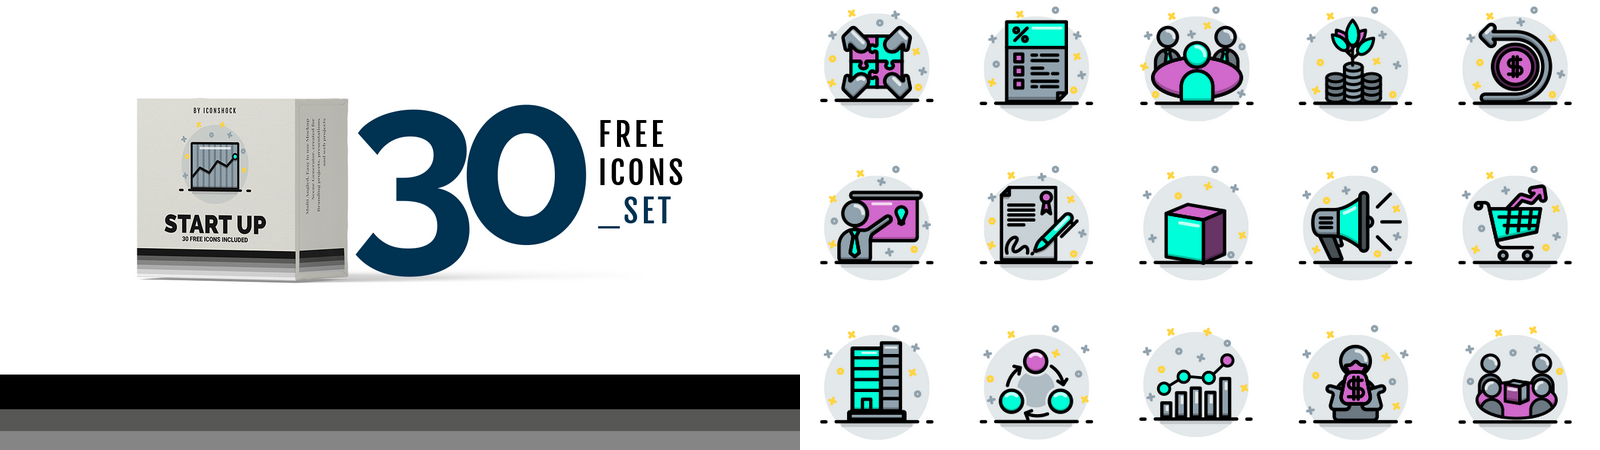 Free Icons.